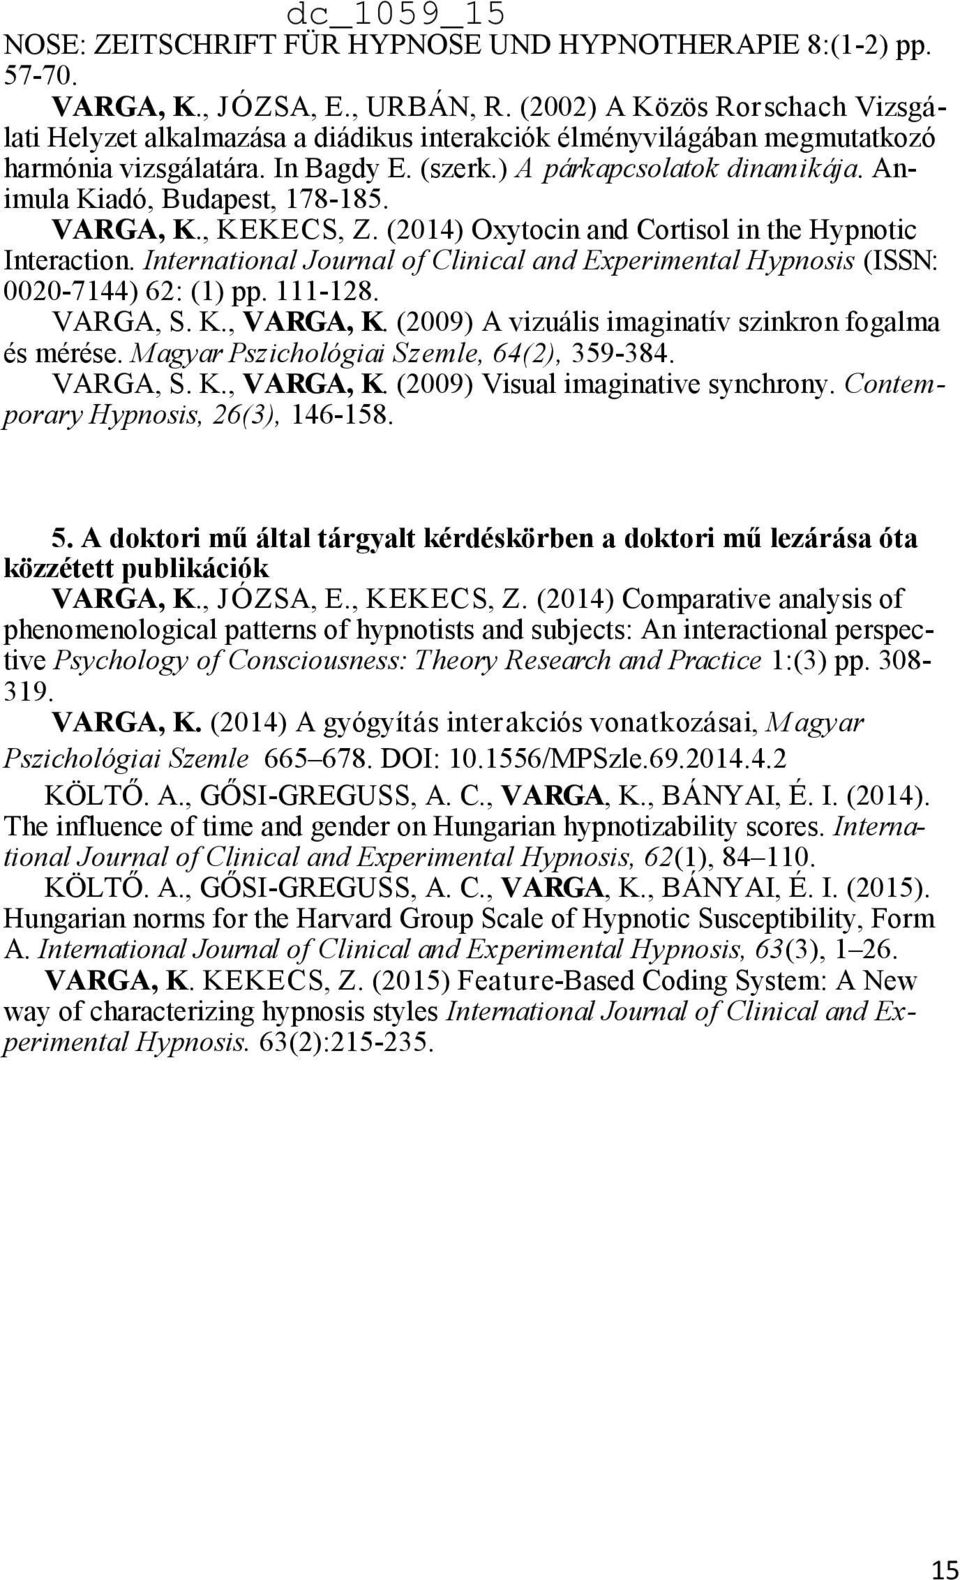 Animula Kiadó, Budapest, 178-185. VARGA, K., KEKECS, Z. (2014) Oxytocin and Cortisol in the Hypnotic Interaction.